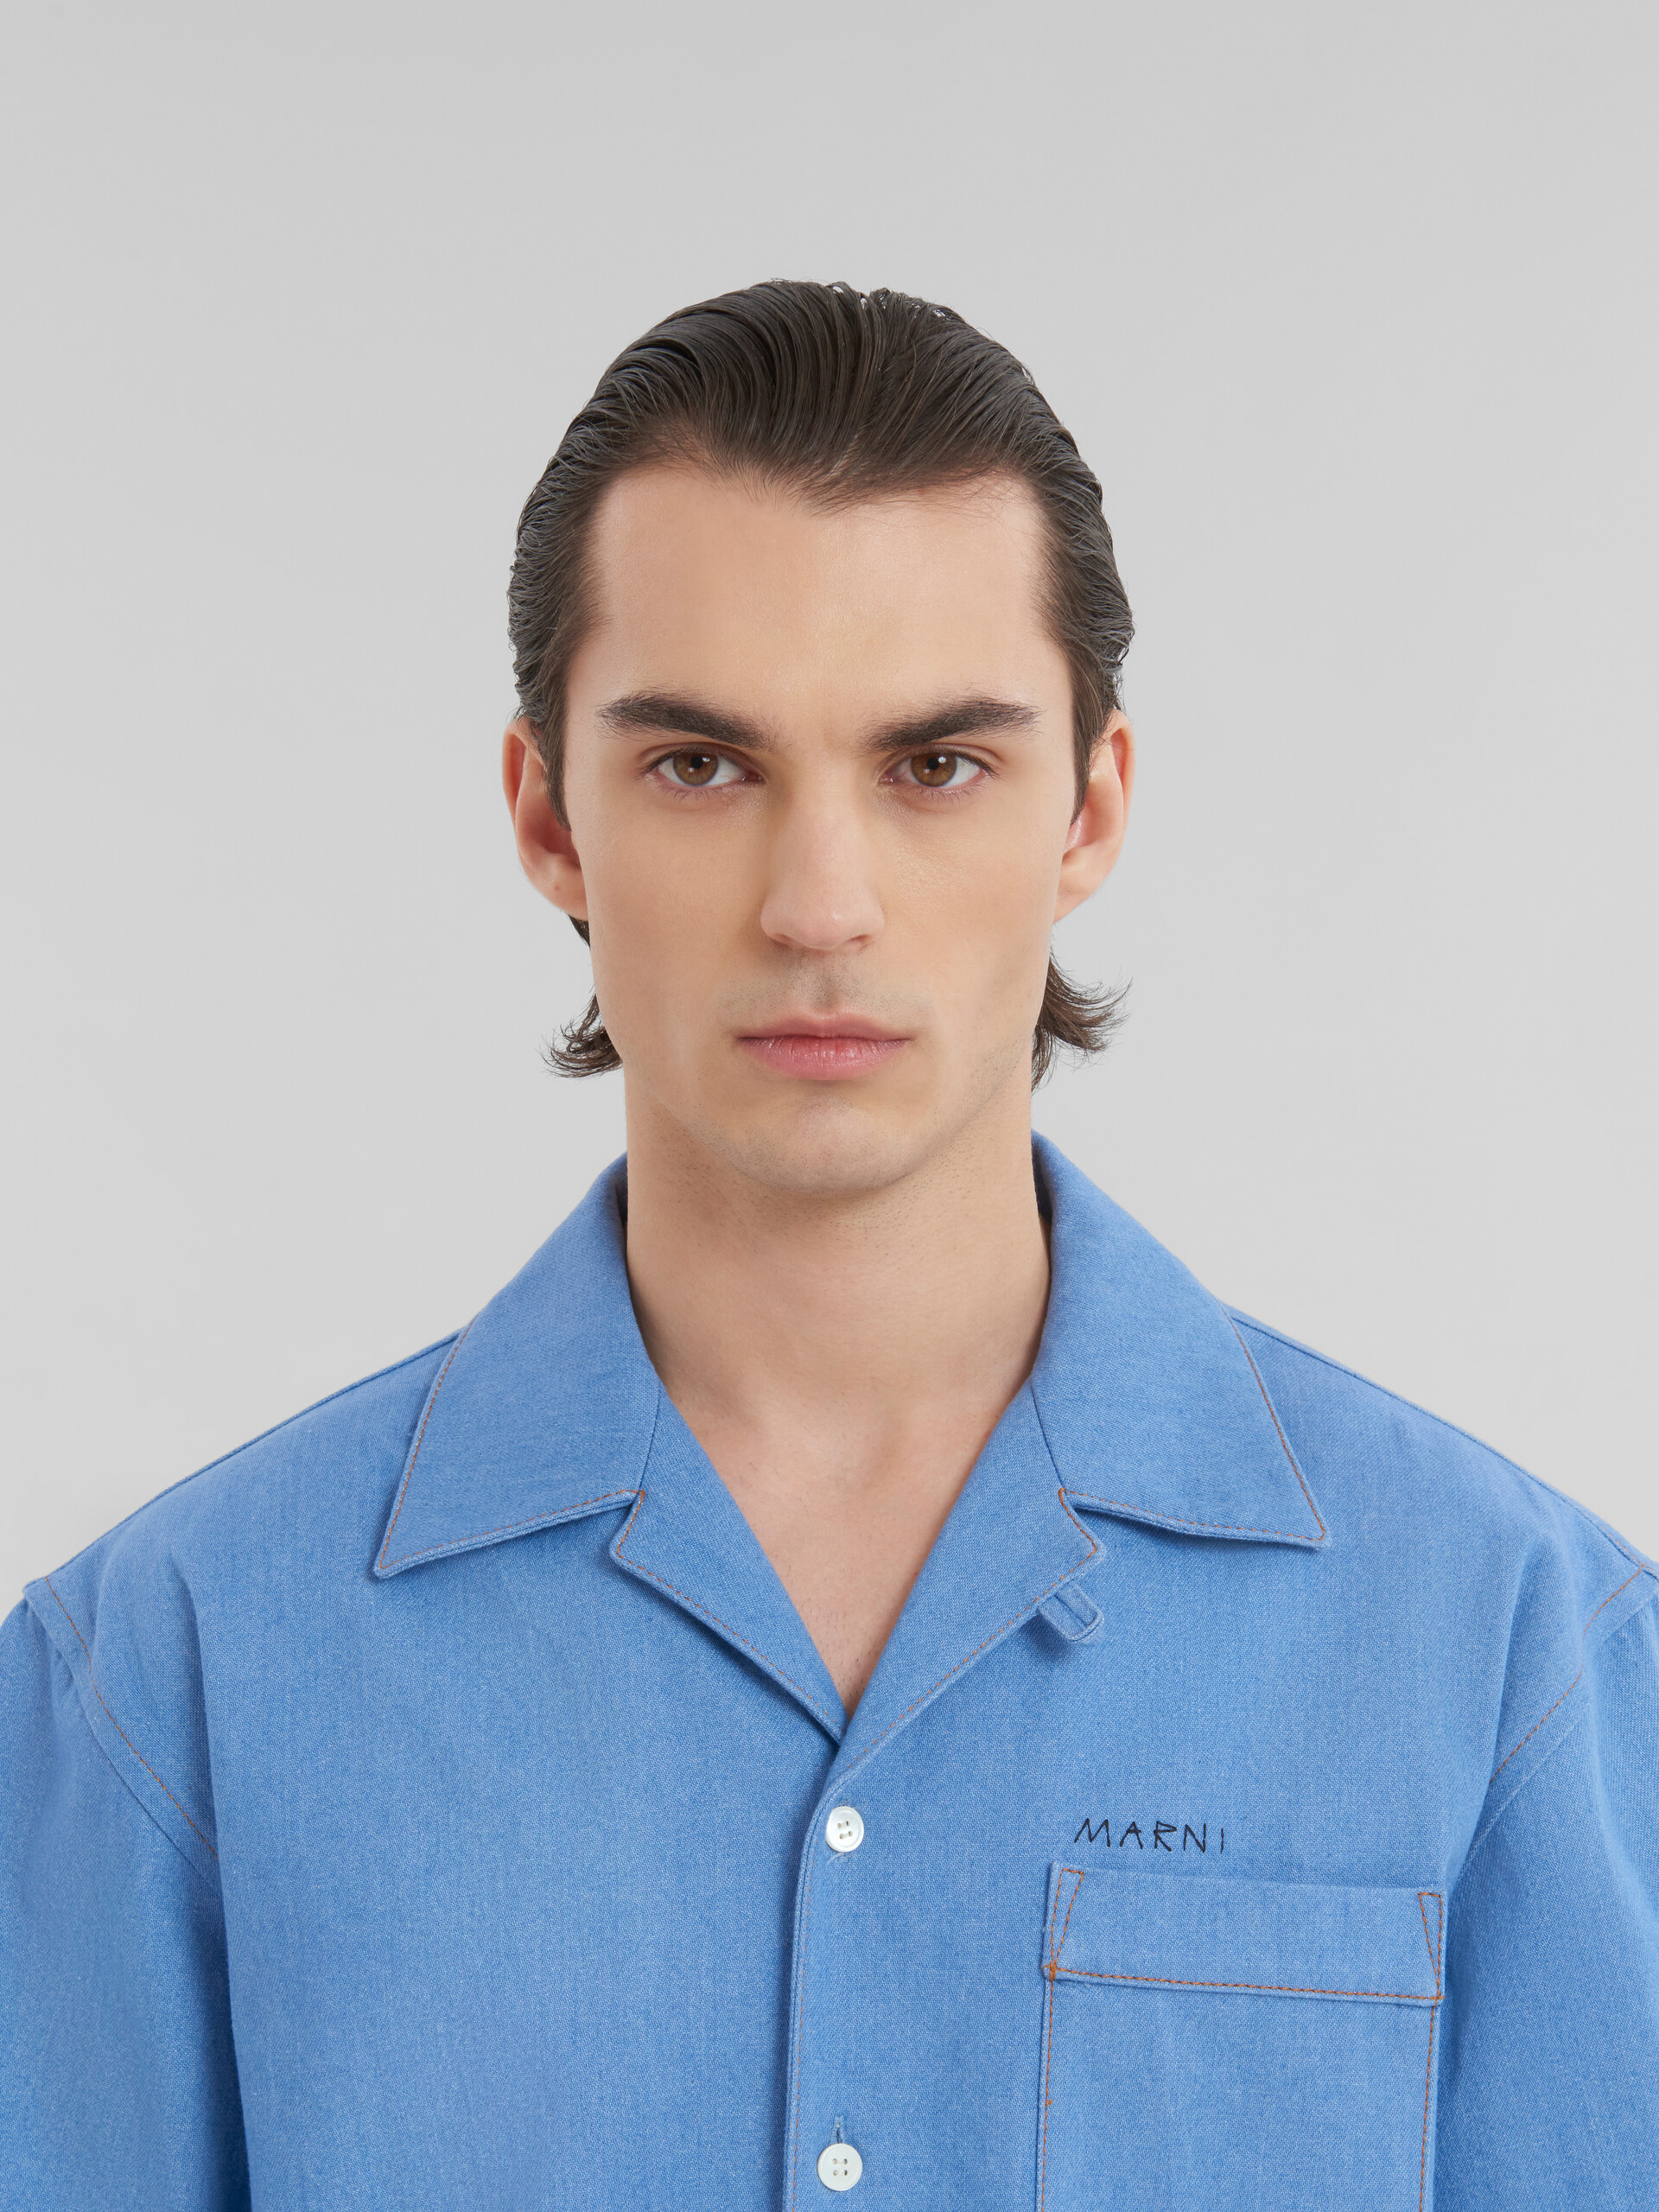 Chemise de bowling en denim bleu avec logo effet raccommodé Marni - Chemises - Image 4